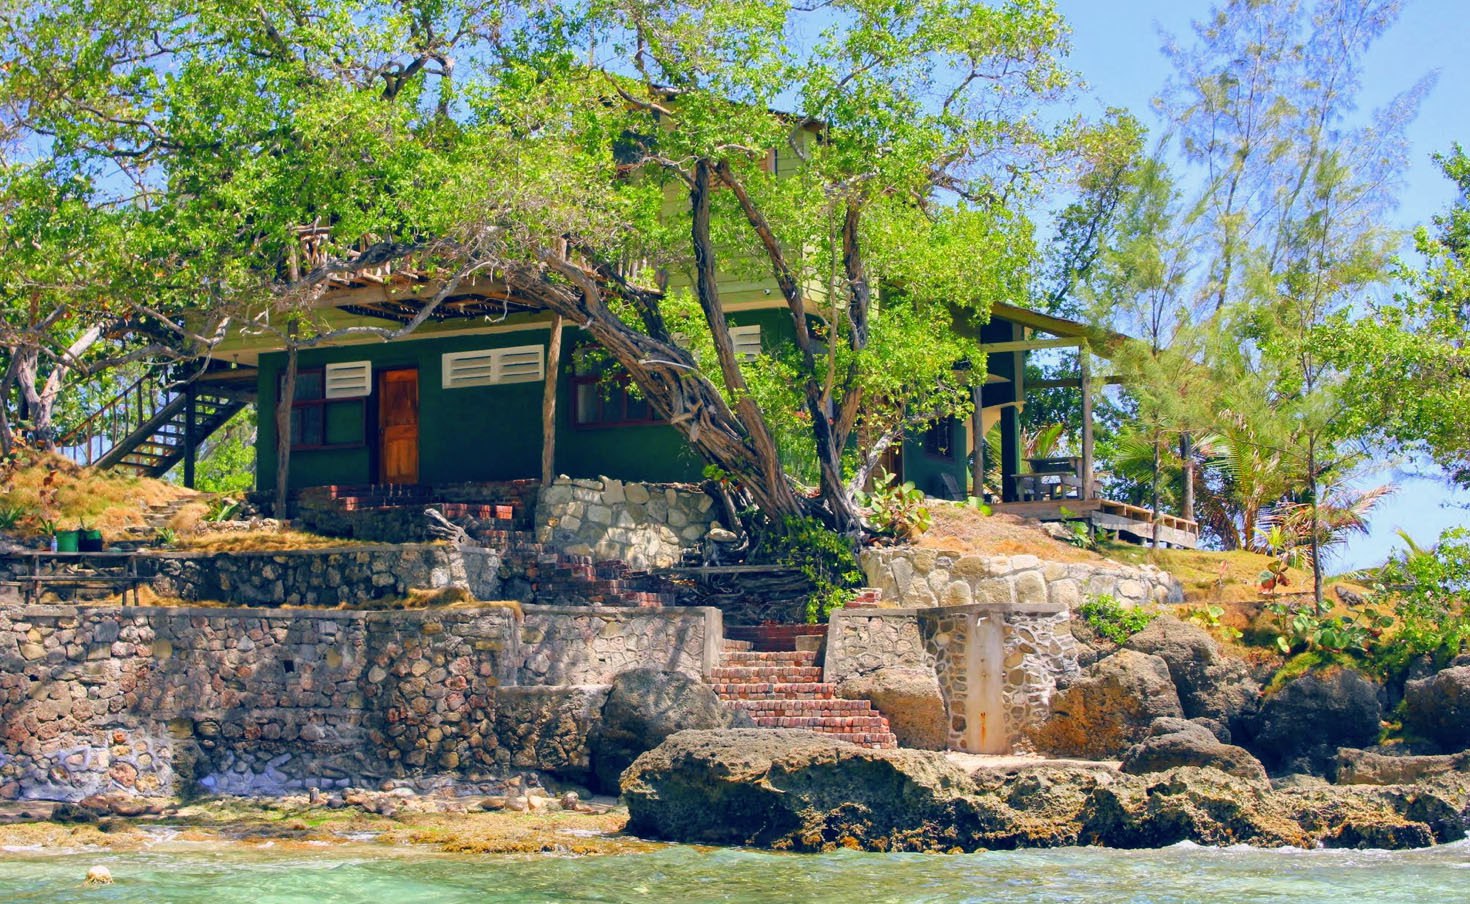 Beachbody Elite retreat for 2014 announced: we’re headed to JAMAICA!